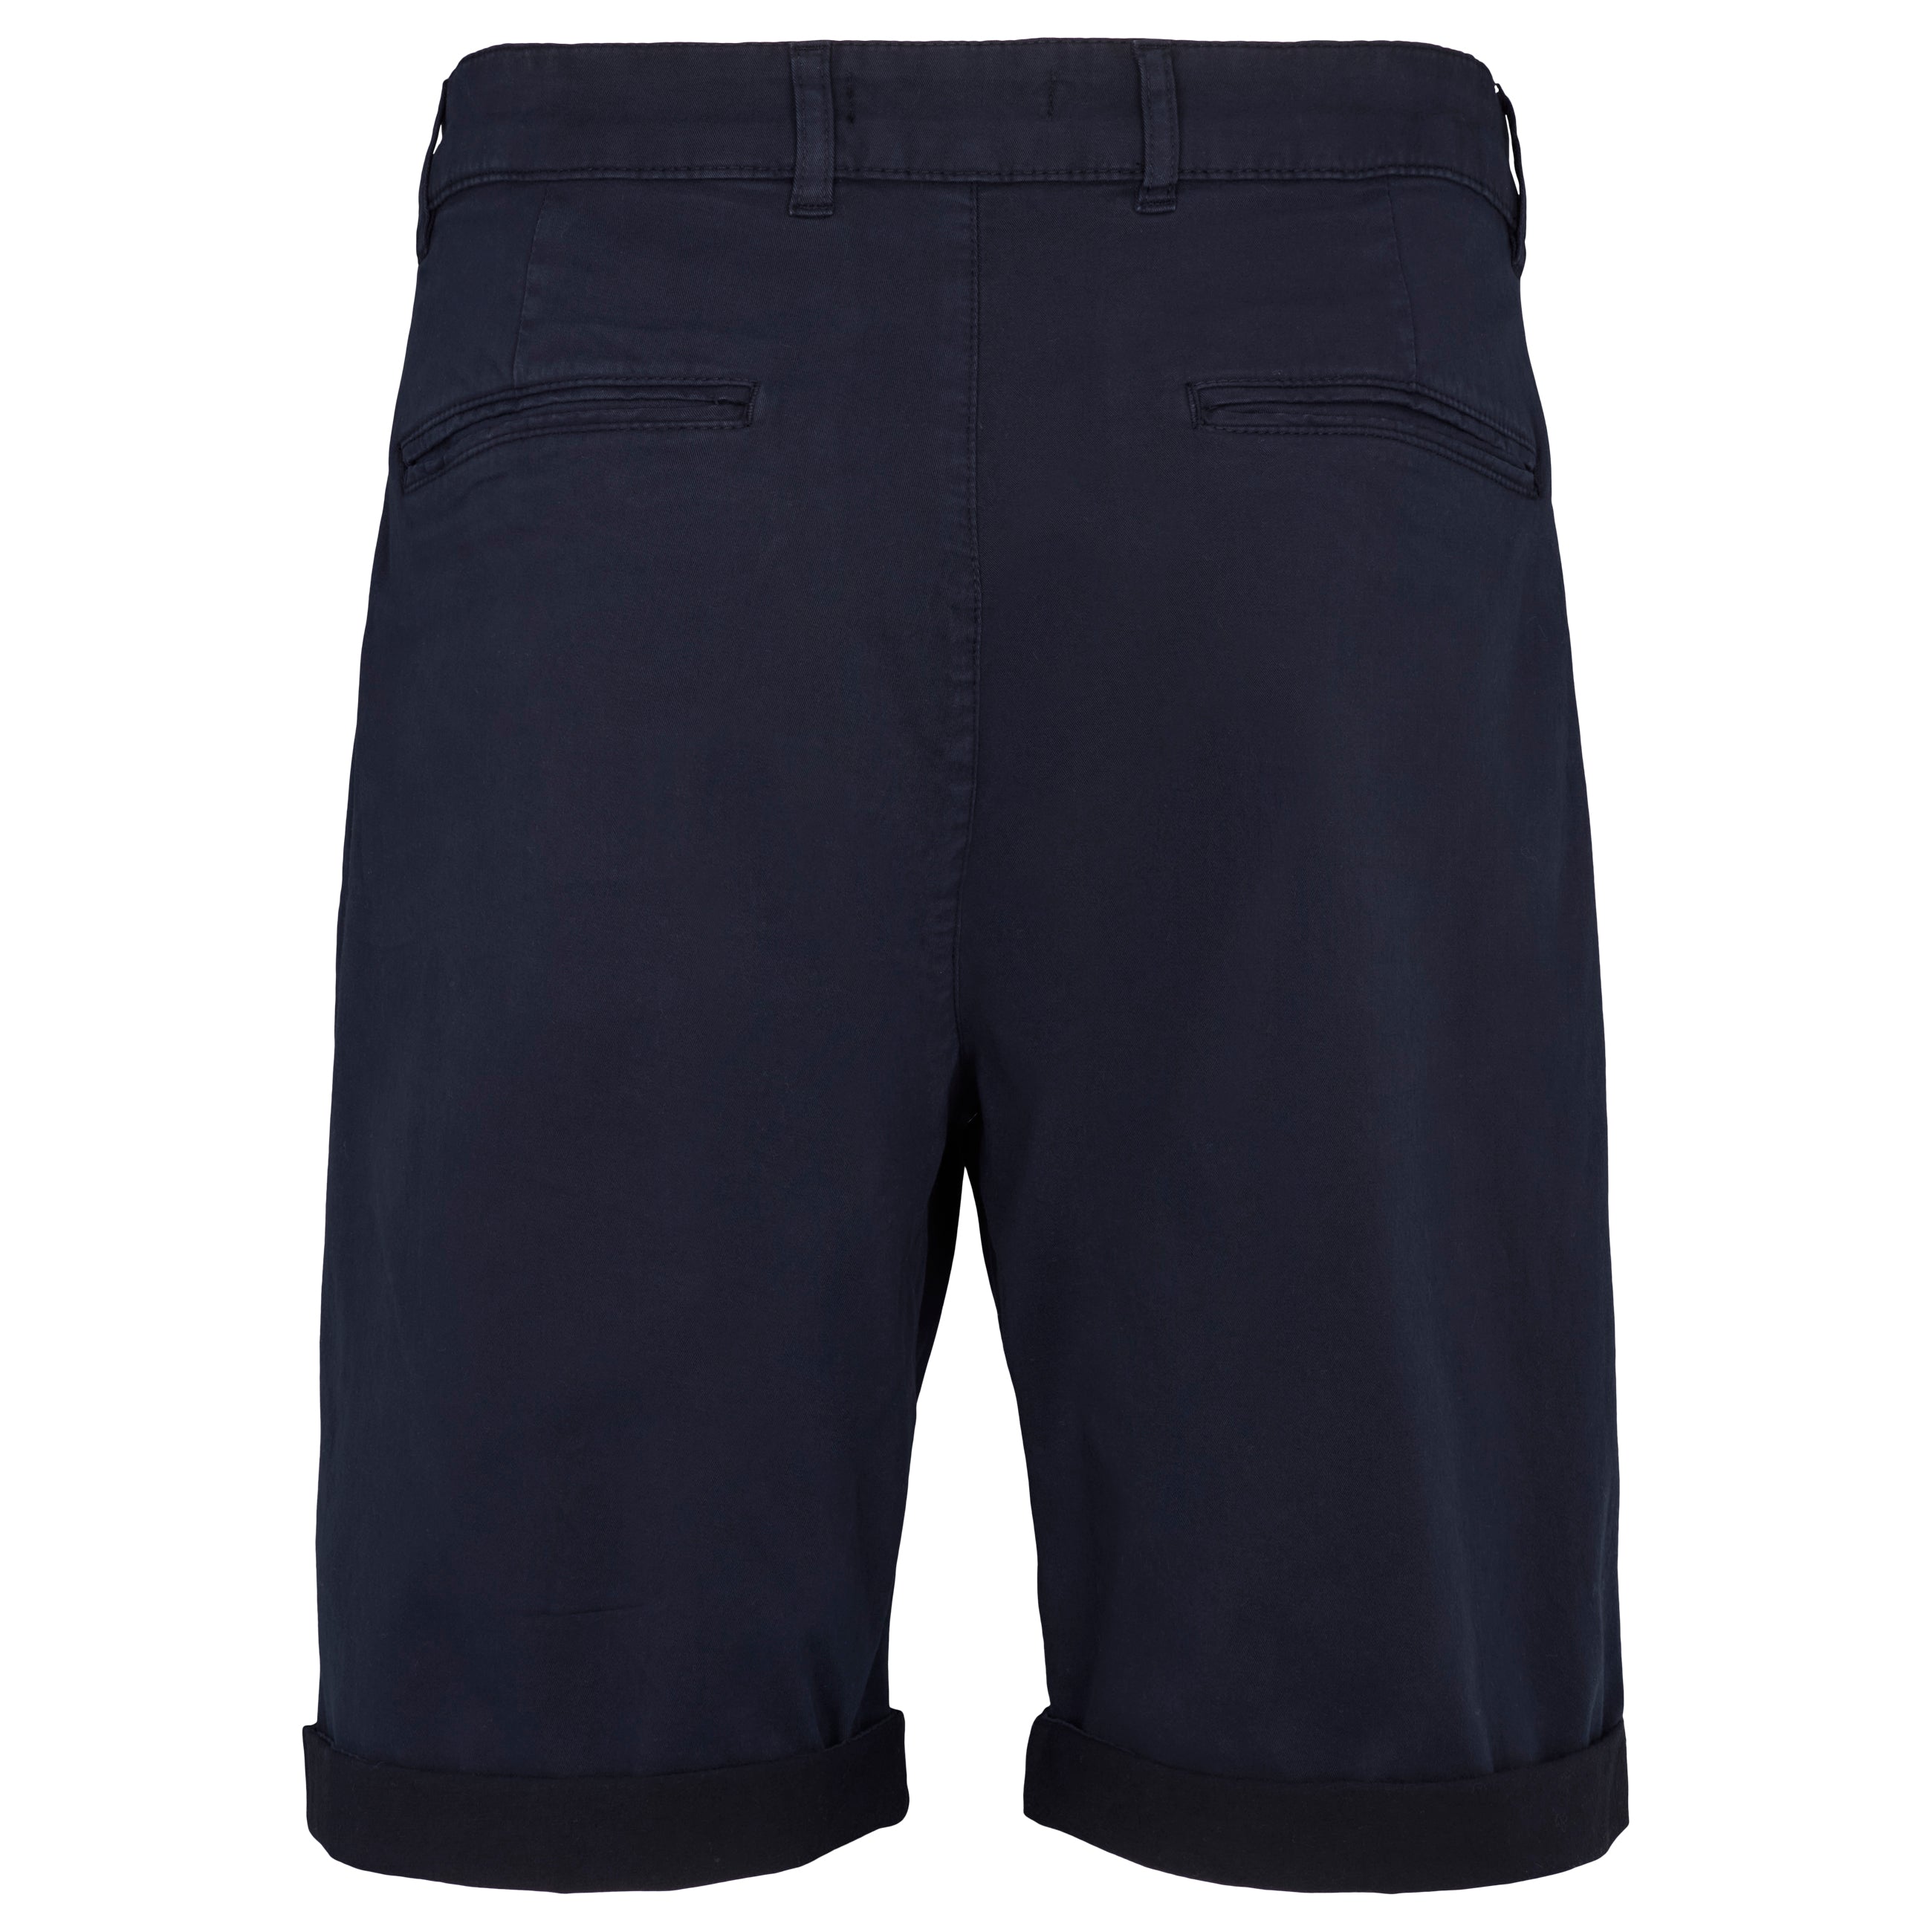 By Garment Makers Die Bio-Chinohose Shorts Shorts 3096 Navy Blazer